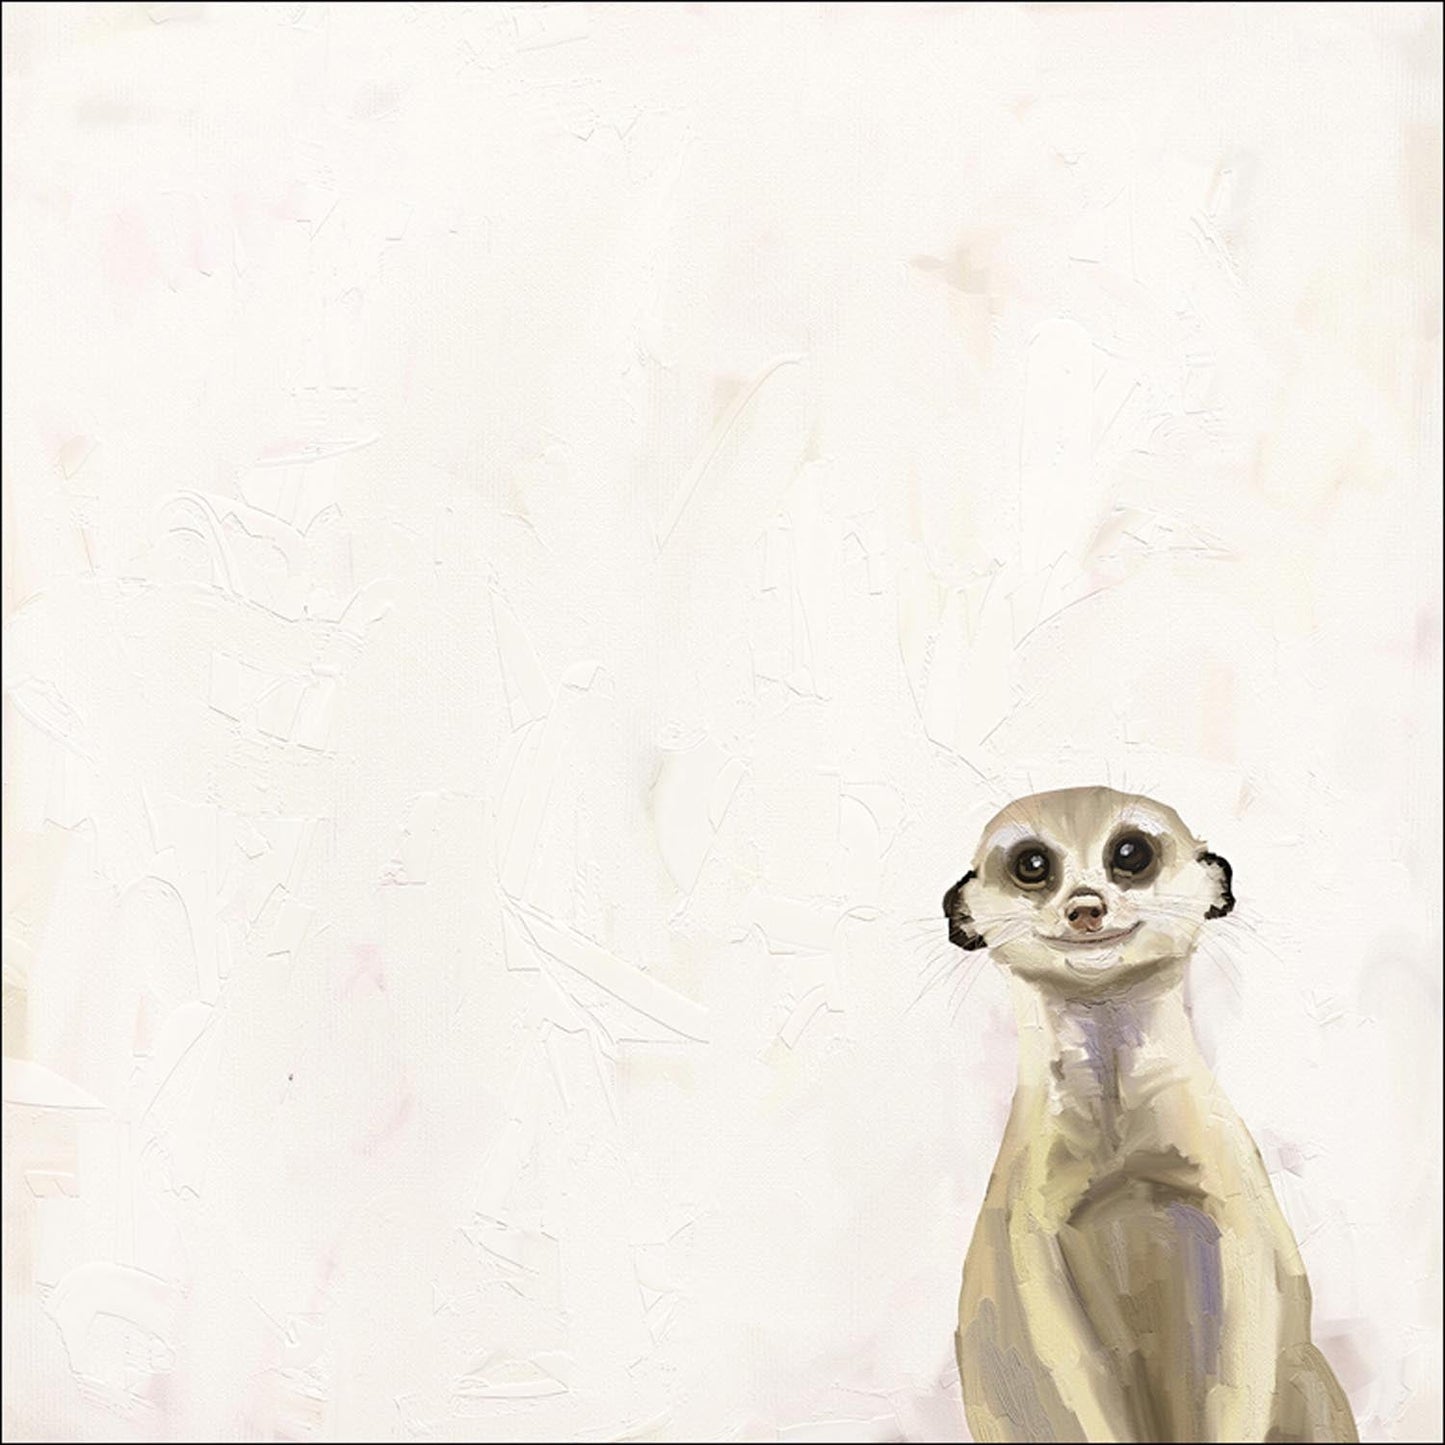 Baby Meerkat Canvas Wall Art - GreenBox Art